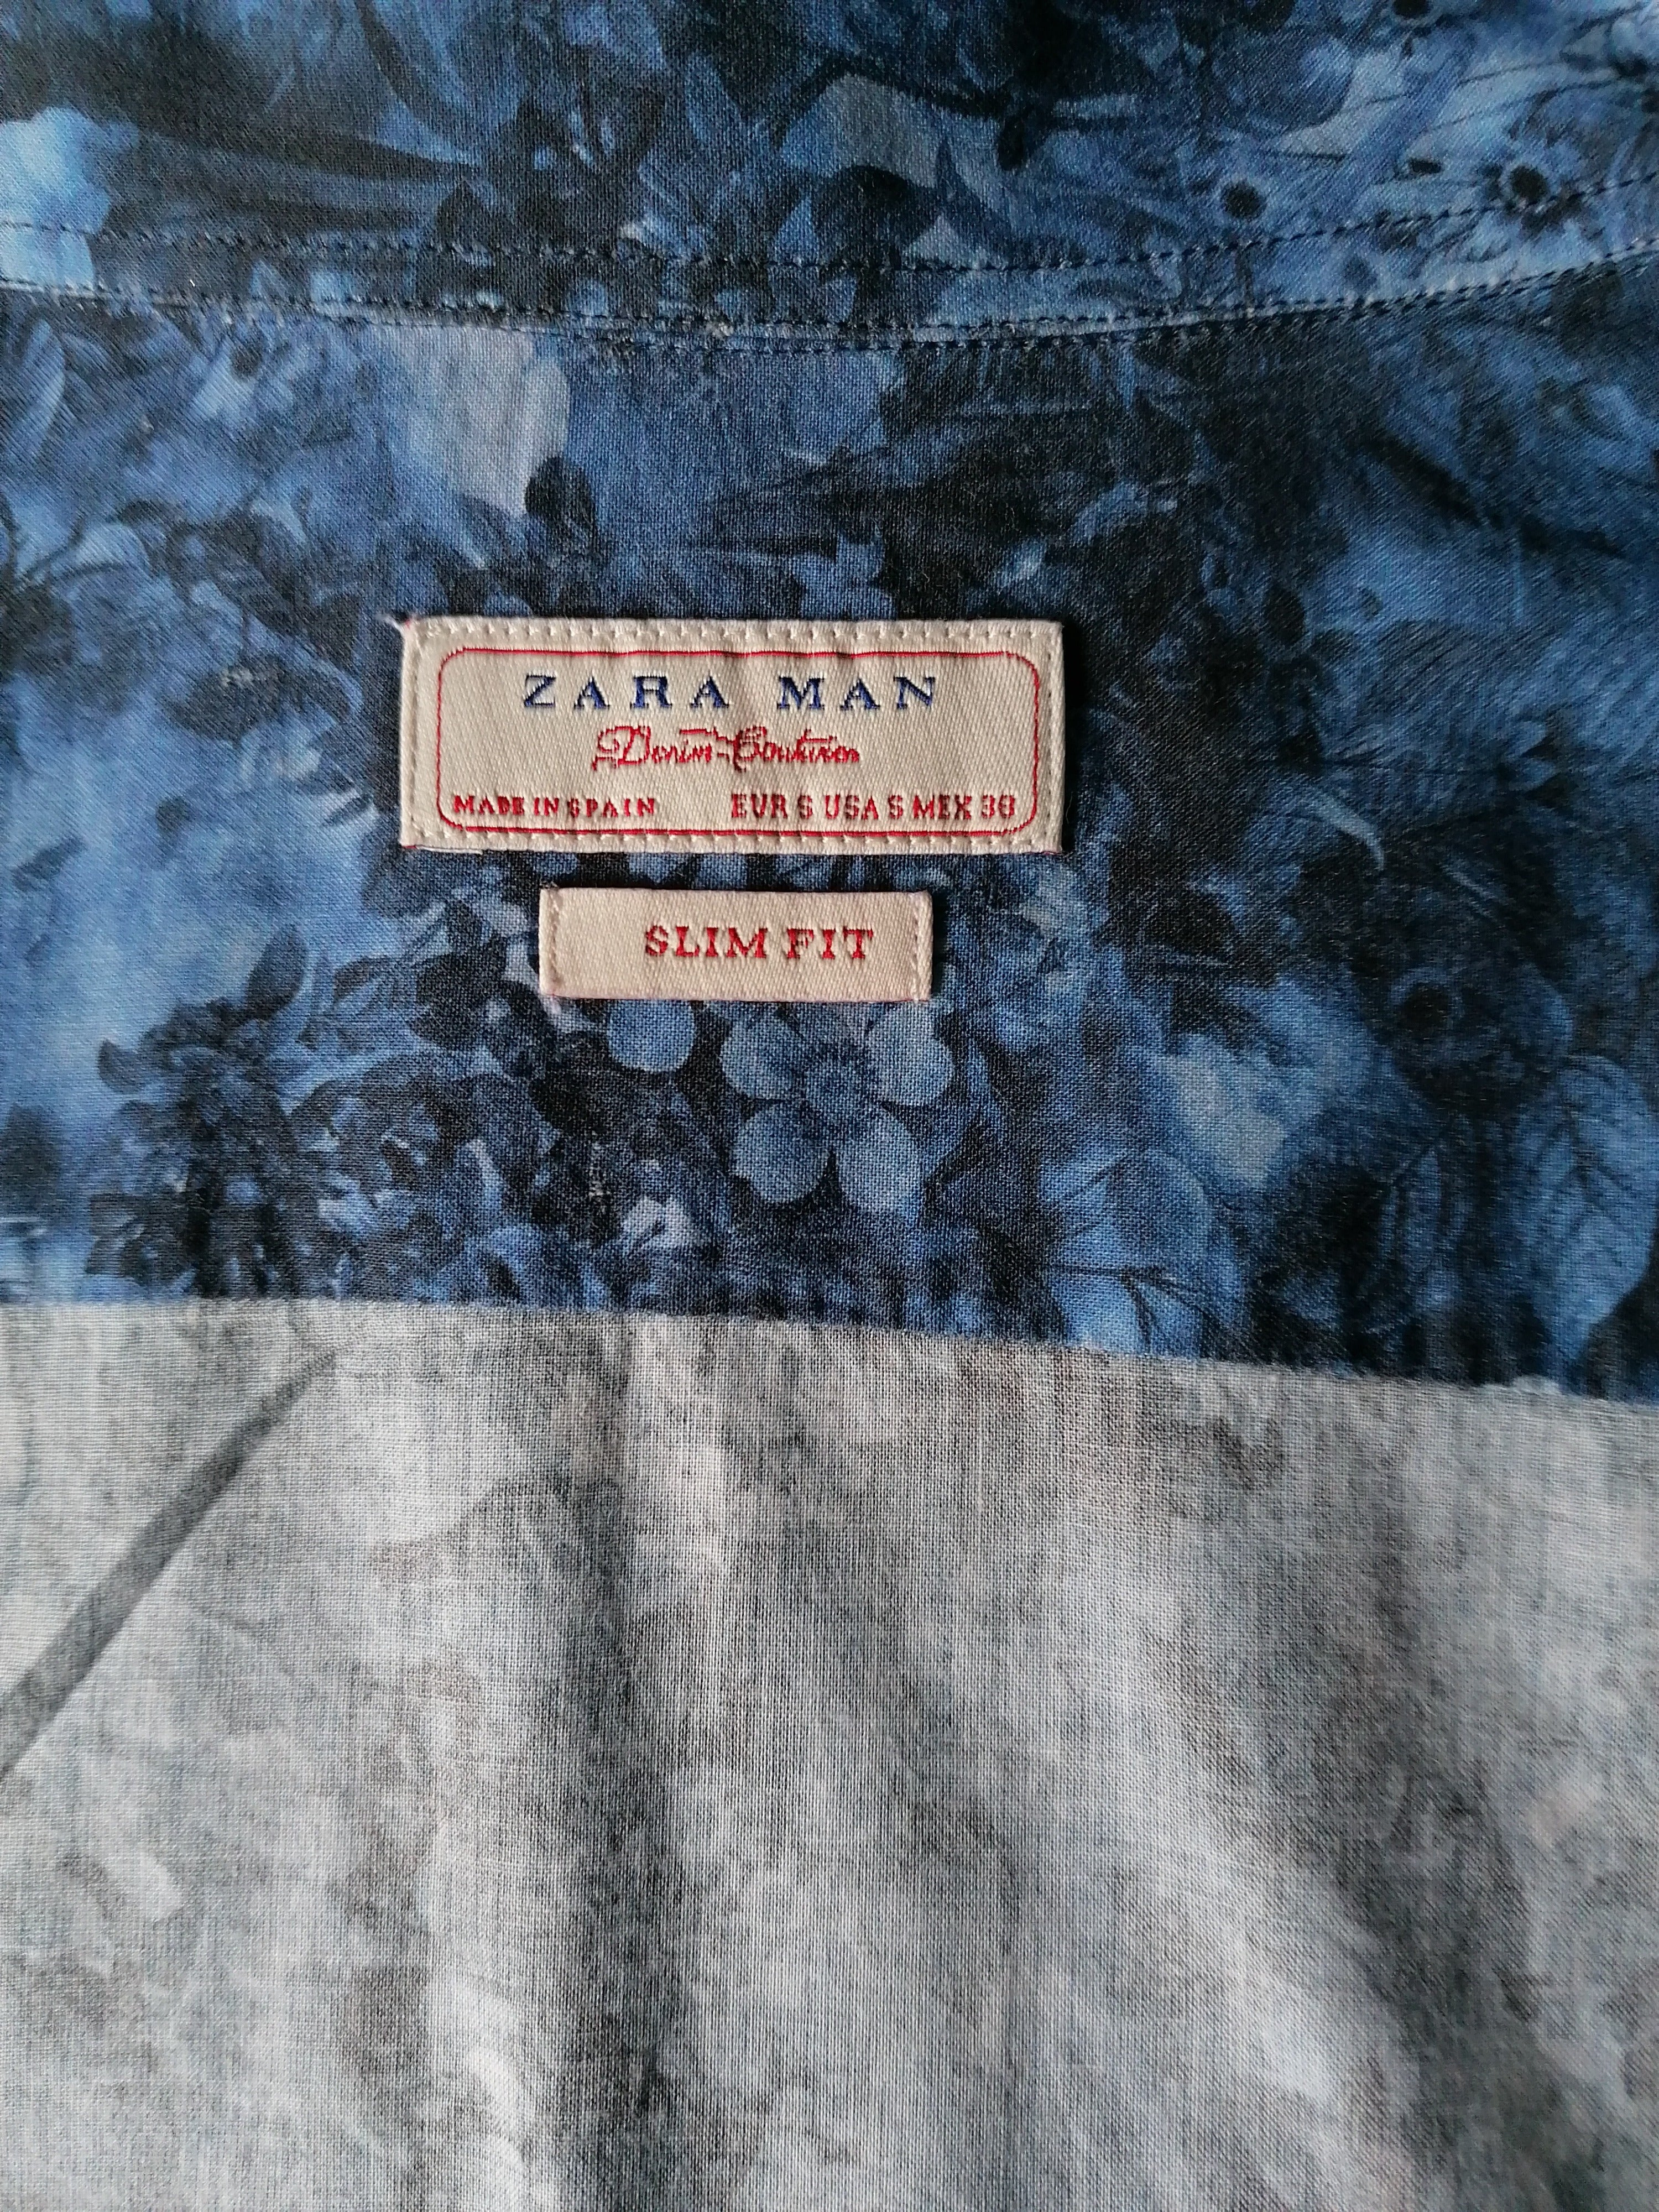 Zara Man overhemd. Blauw Maat S. Slim Fit |